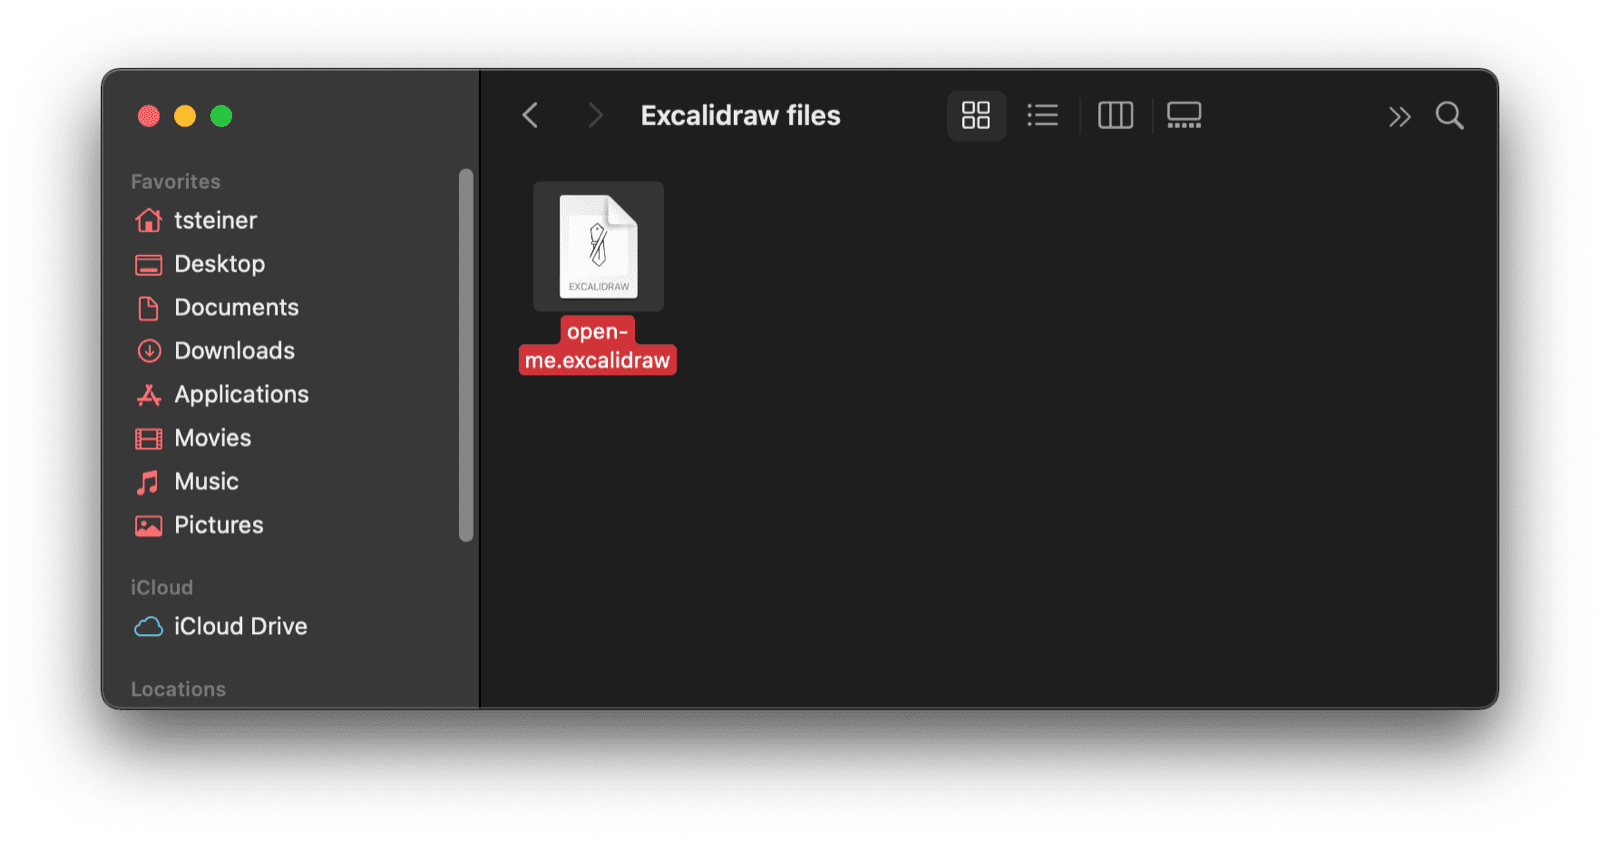 Excalidraw ファイルが表示されている macOS のファインダー ウィンドウ。